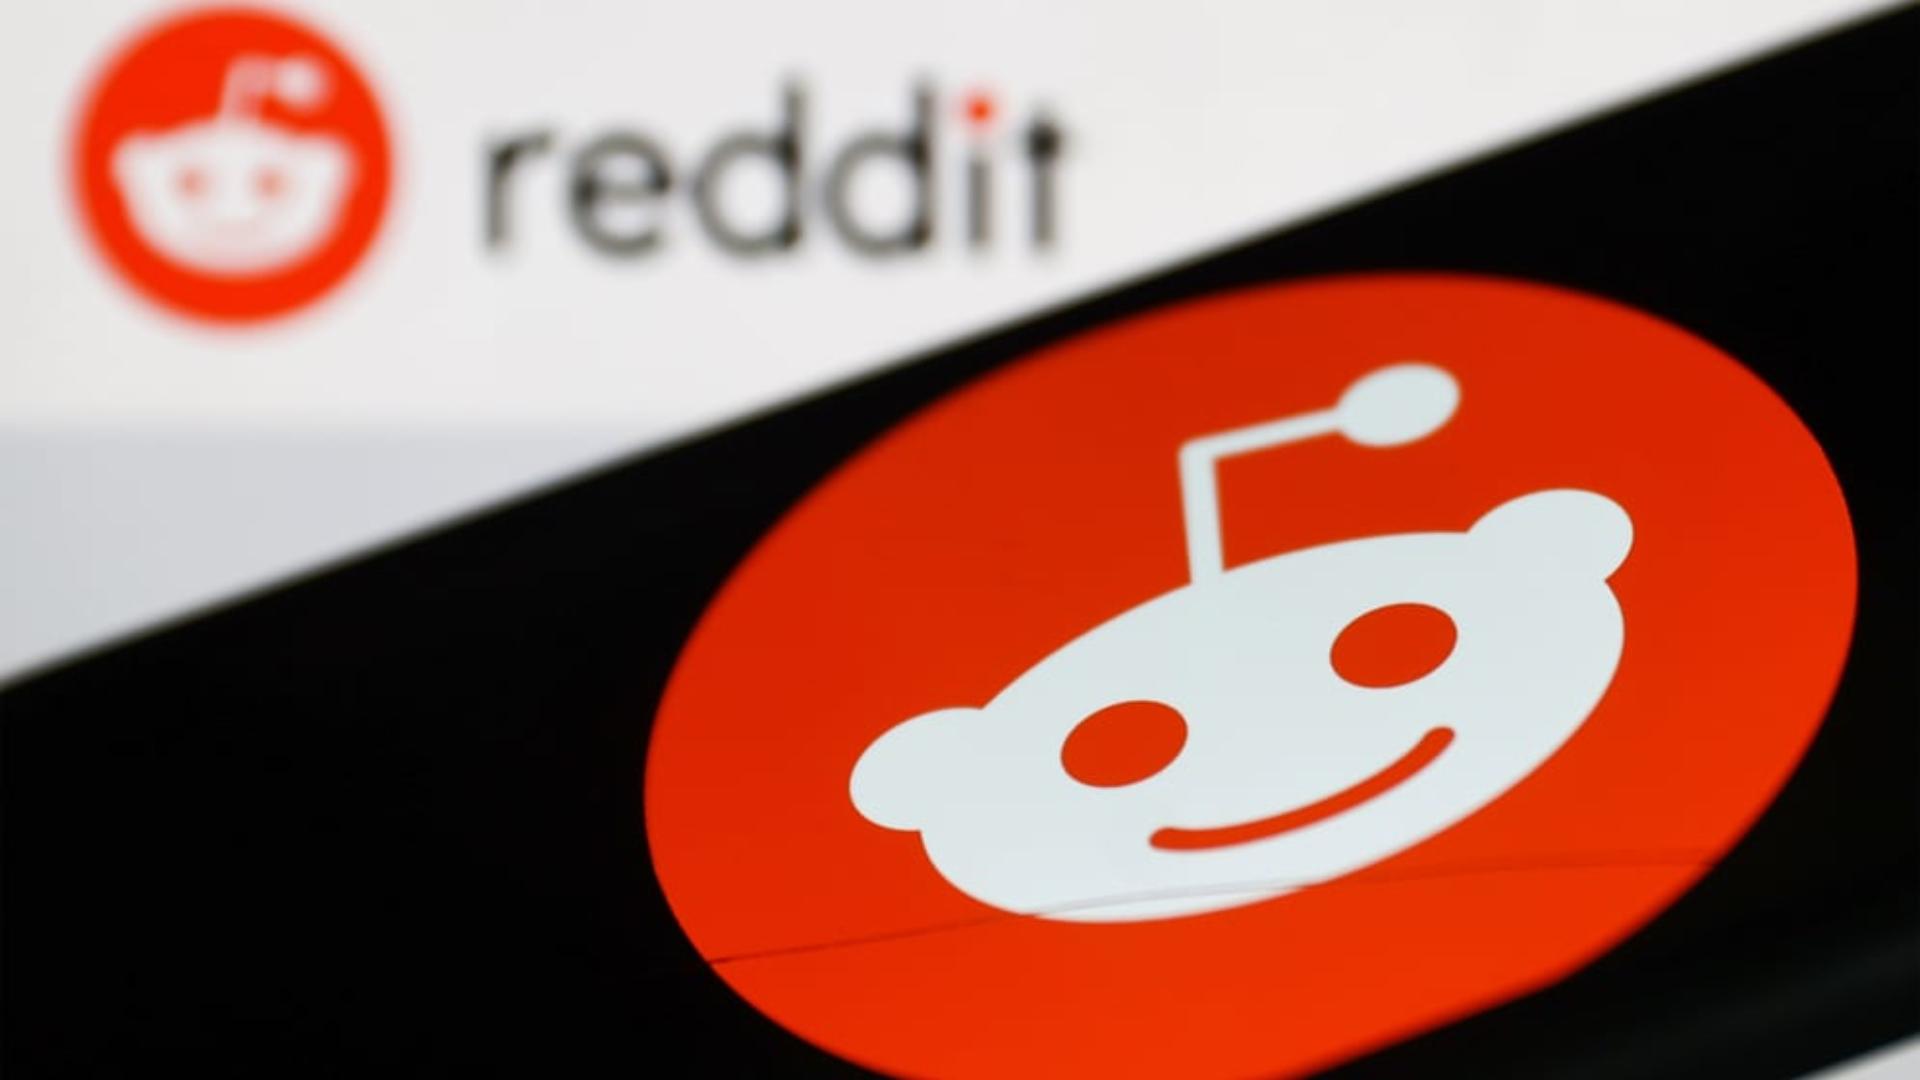 Reddit, Google Strike $60M Annual AI Content Deal